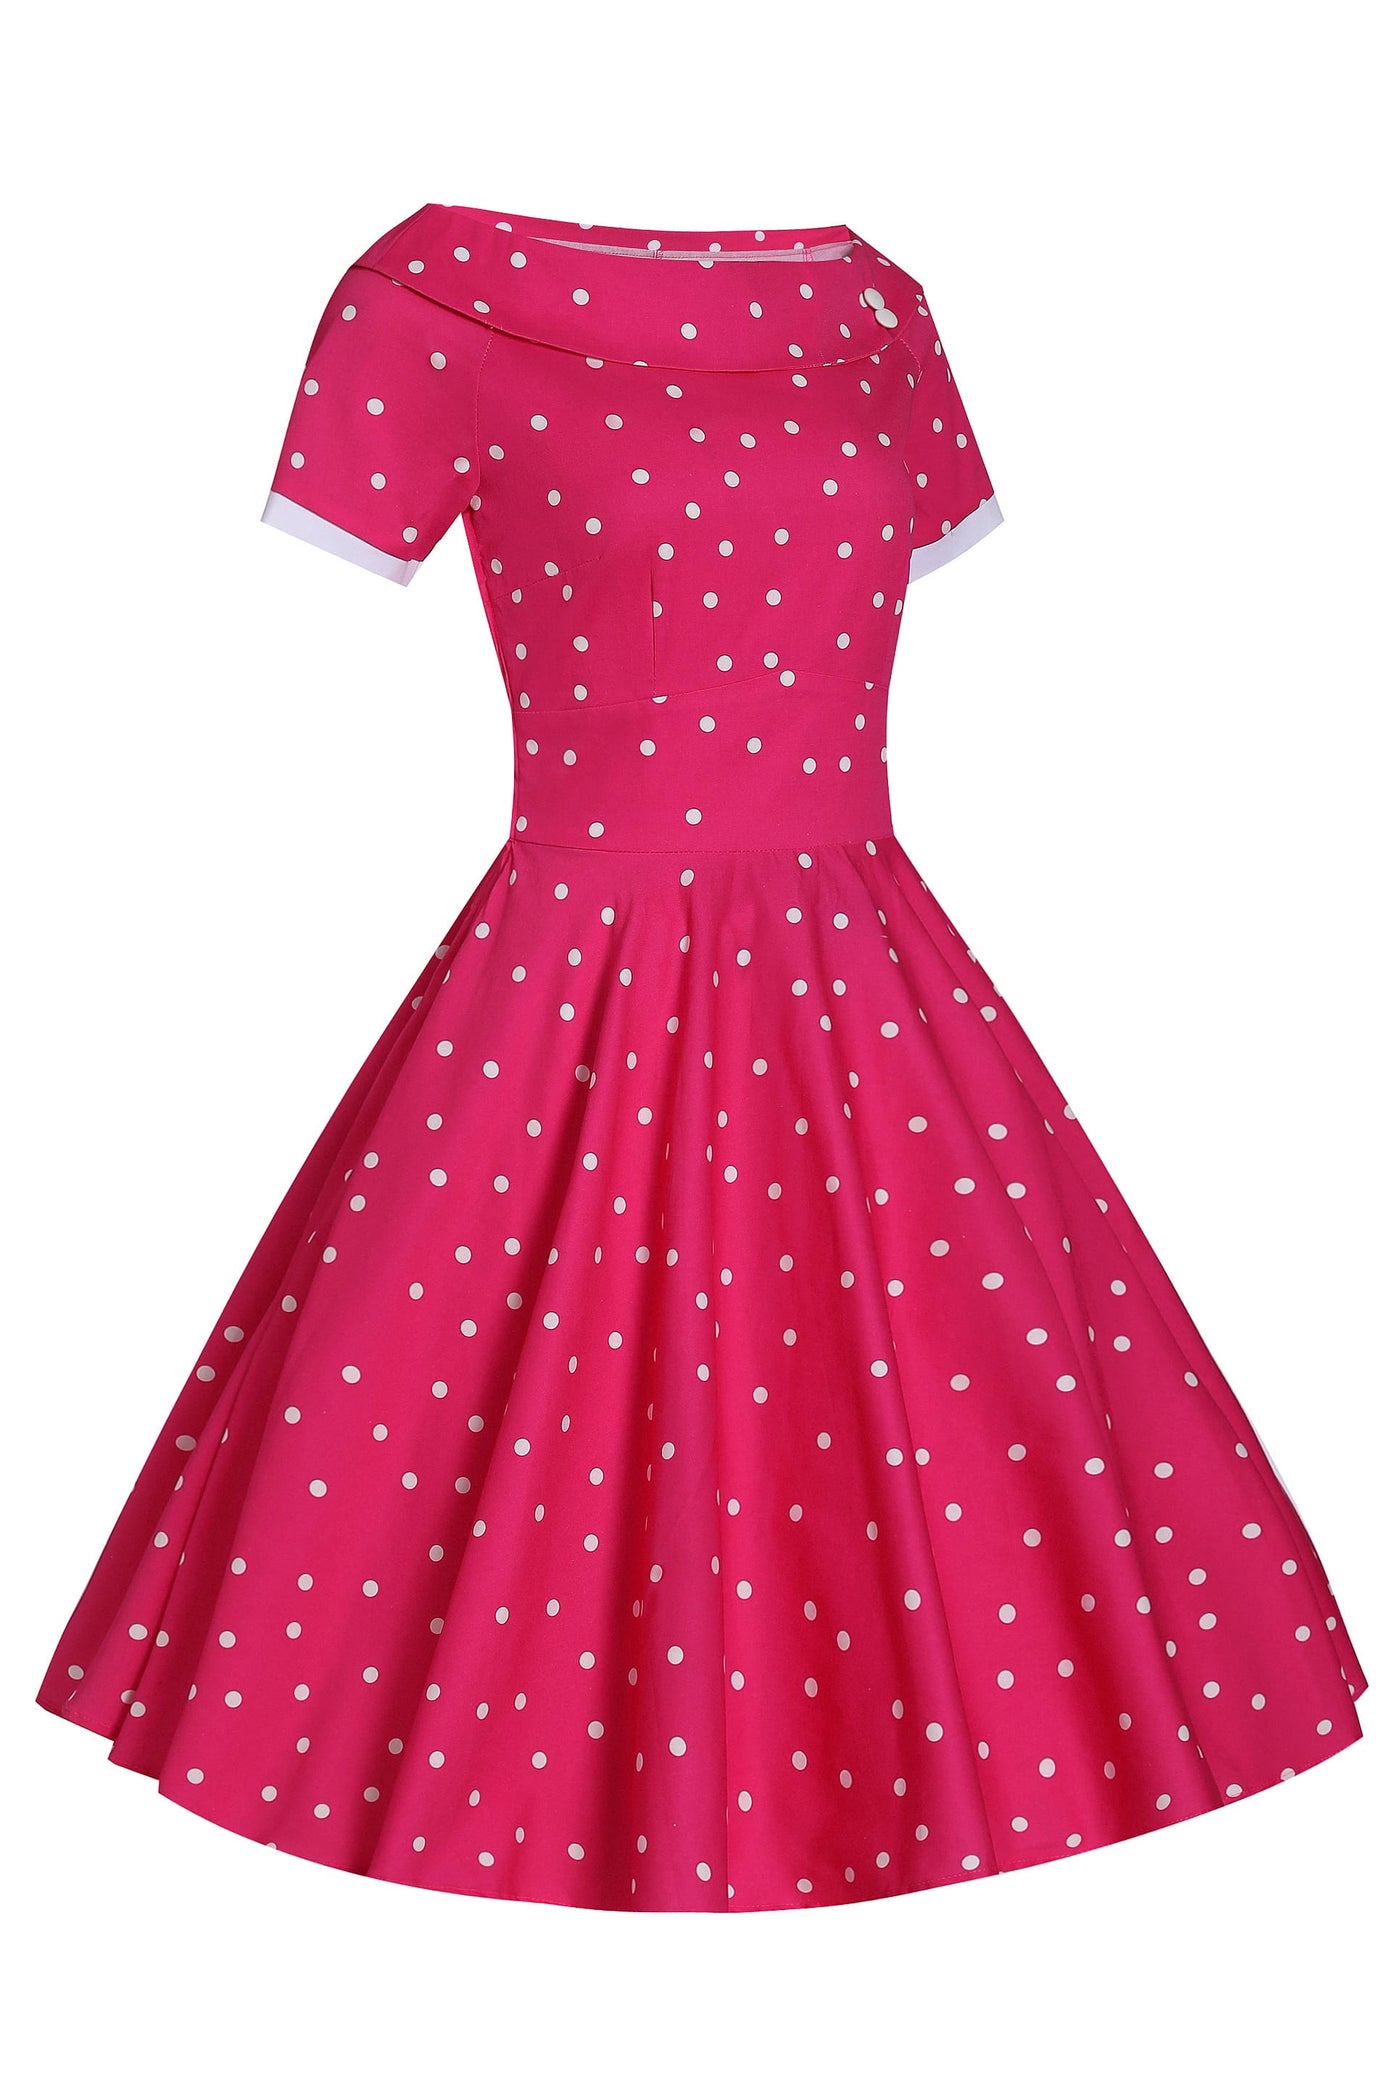 Hot Pink Polka Dot Swing Dress